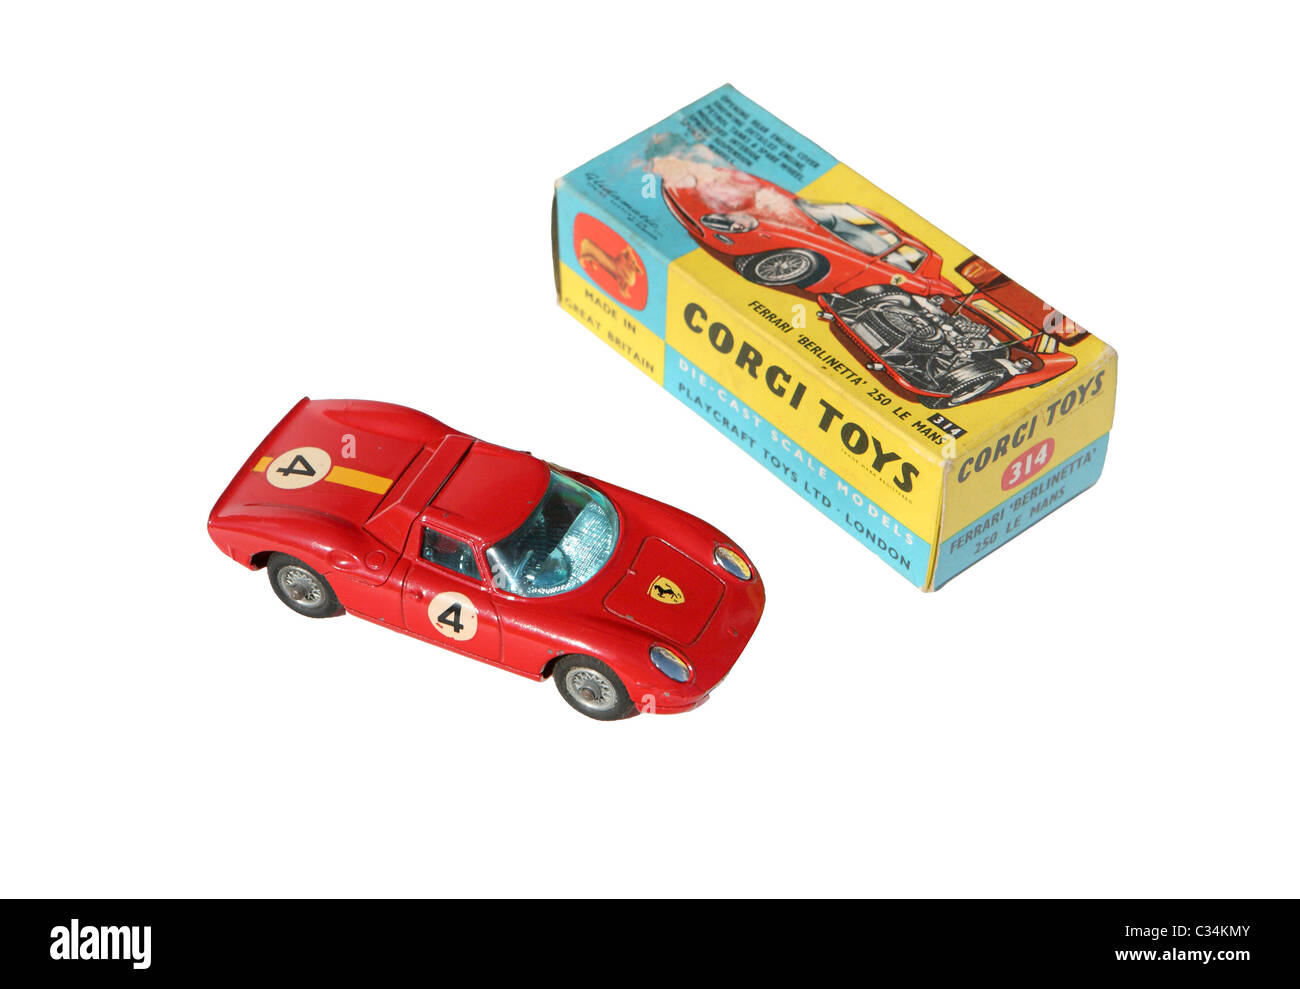 Corgi toys berlinetta Ferrari Foto Stock